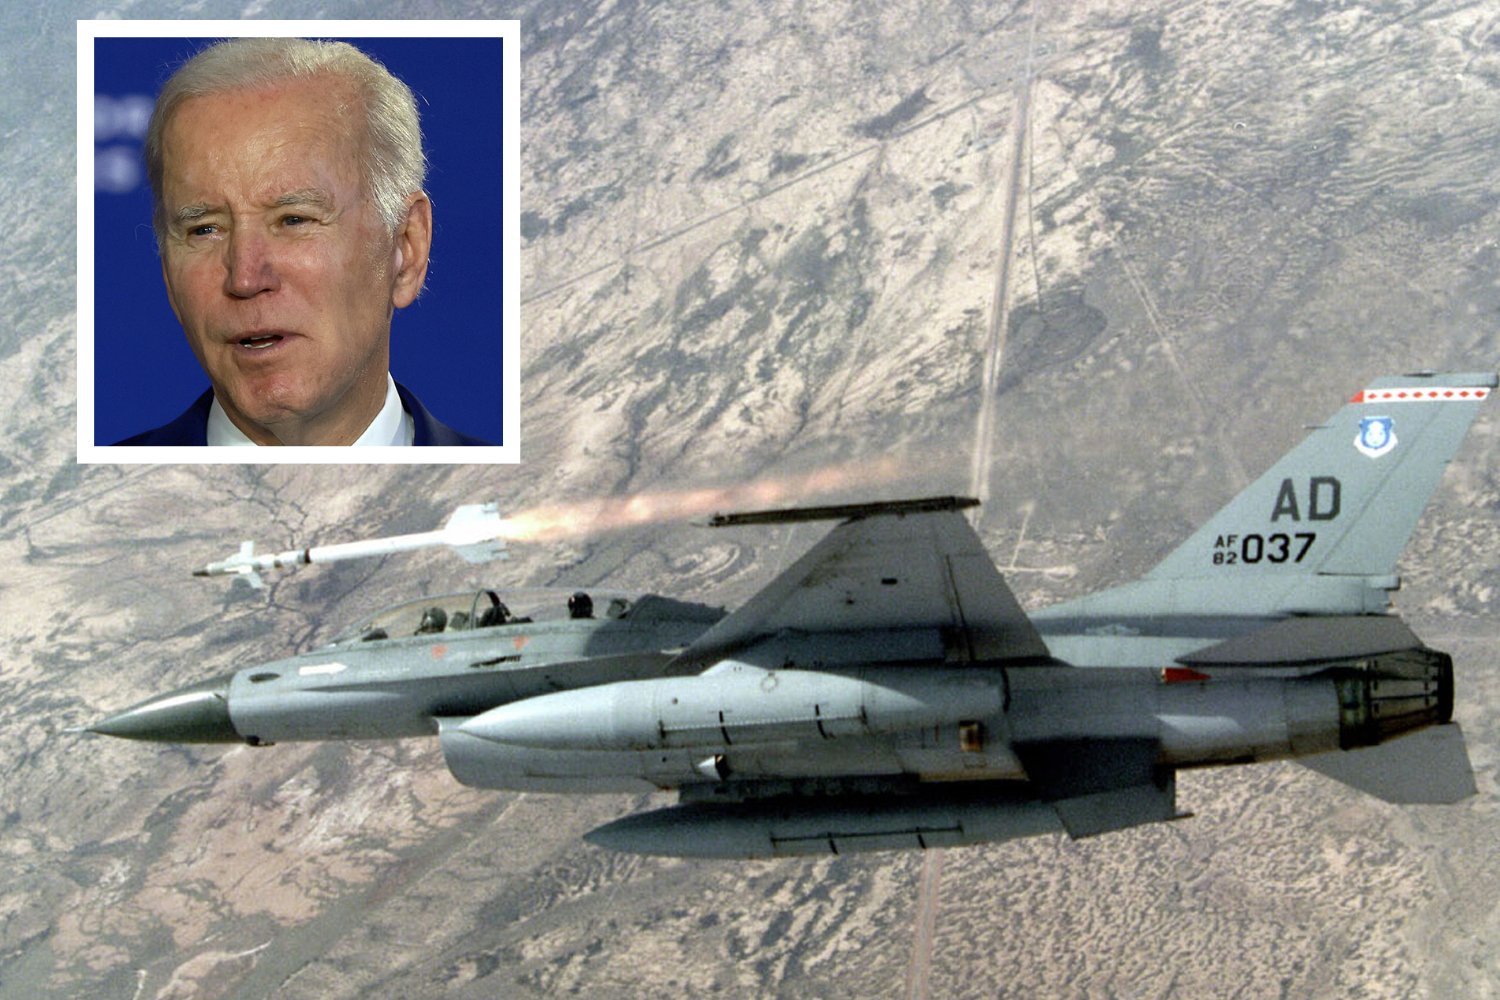 Was “Sidewinder” missile Biden’s best option against unidentified objects?